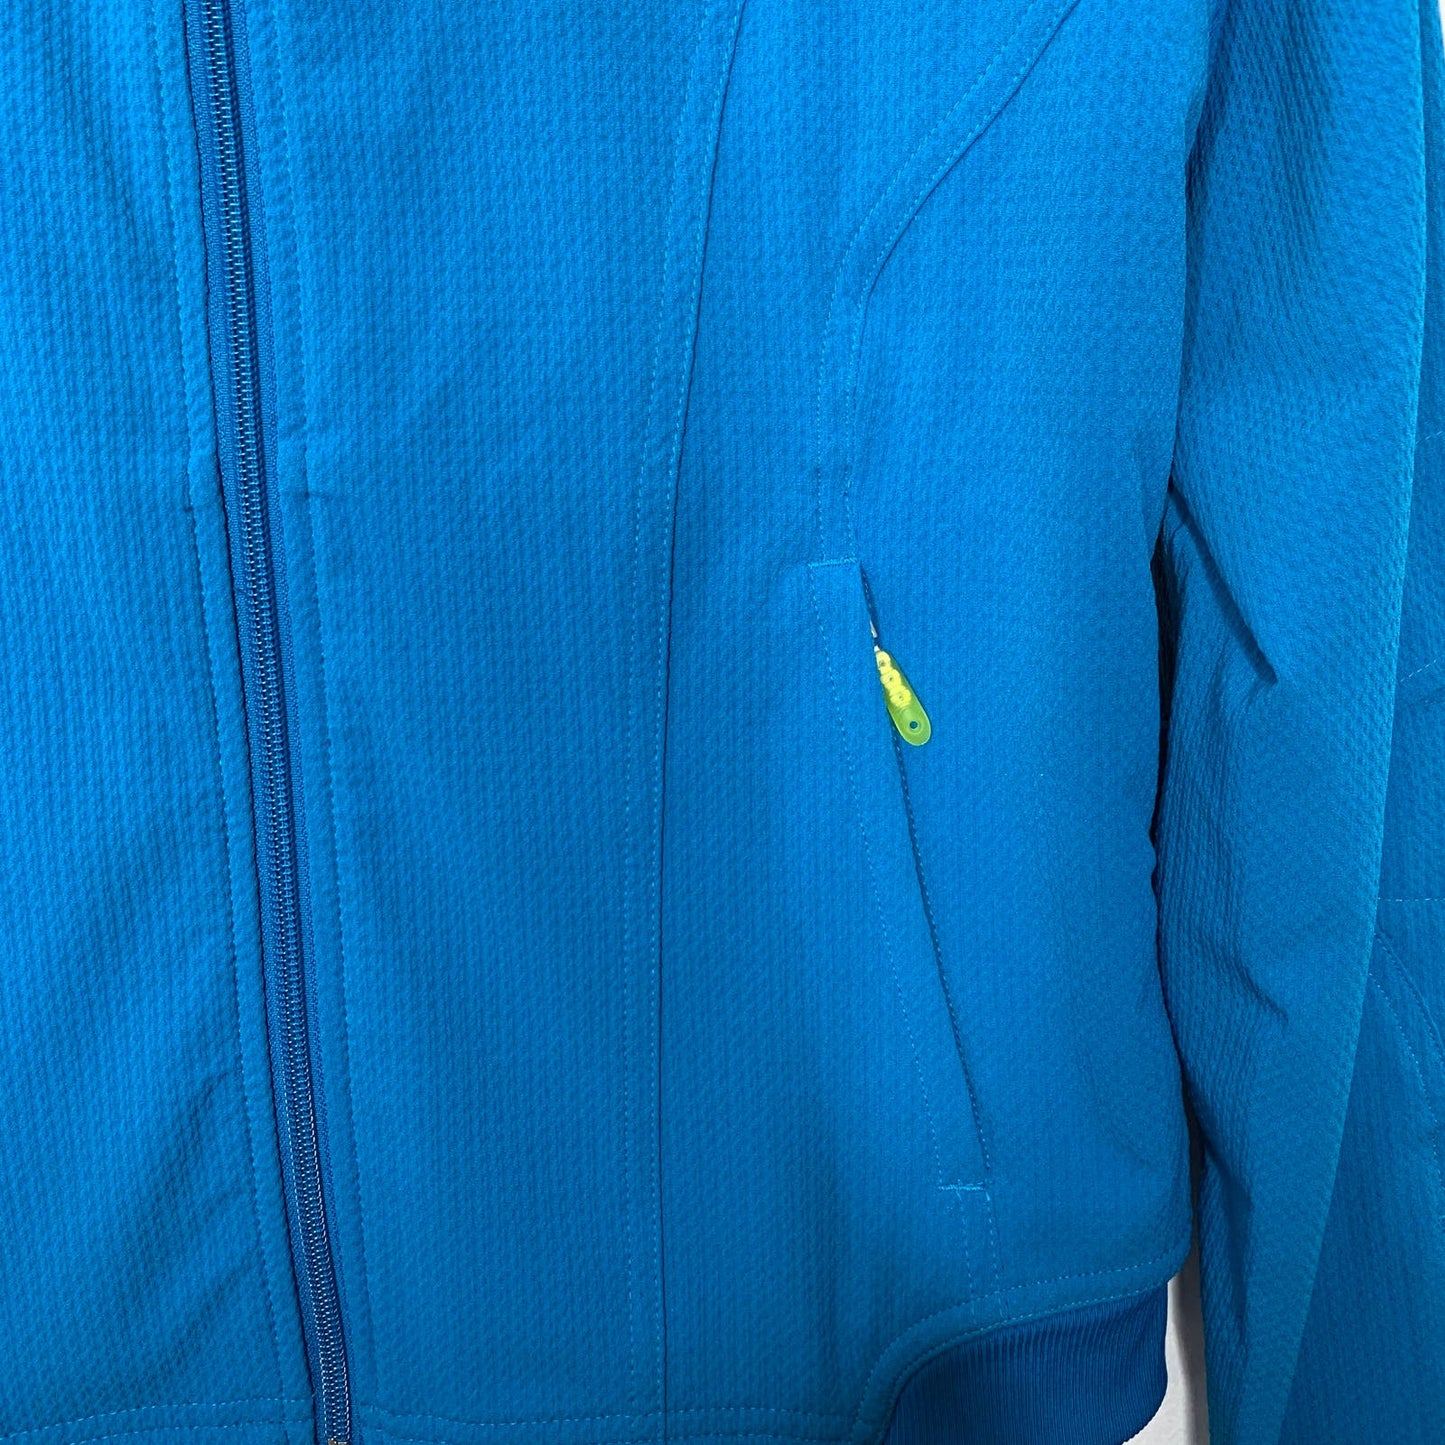 Sphere Dry blue zip up windbreaker jacket SZ S